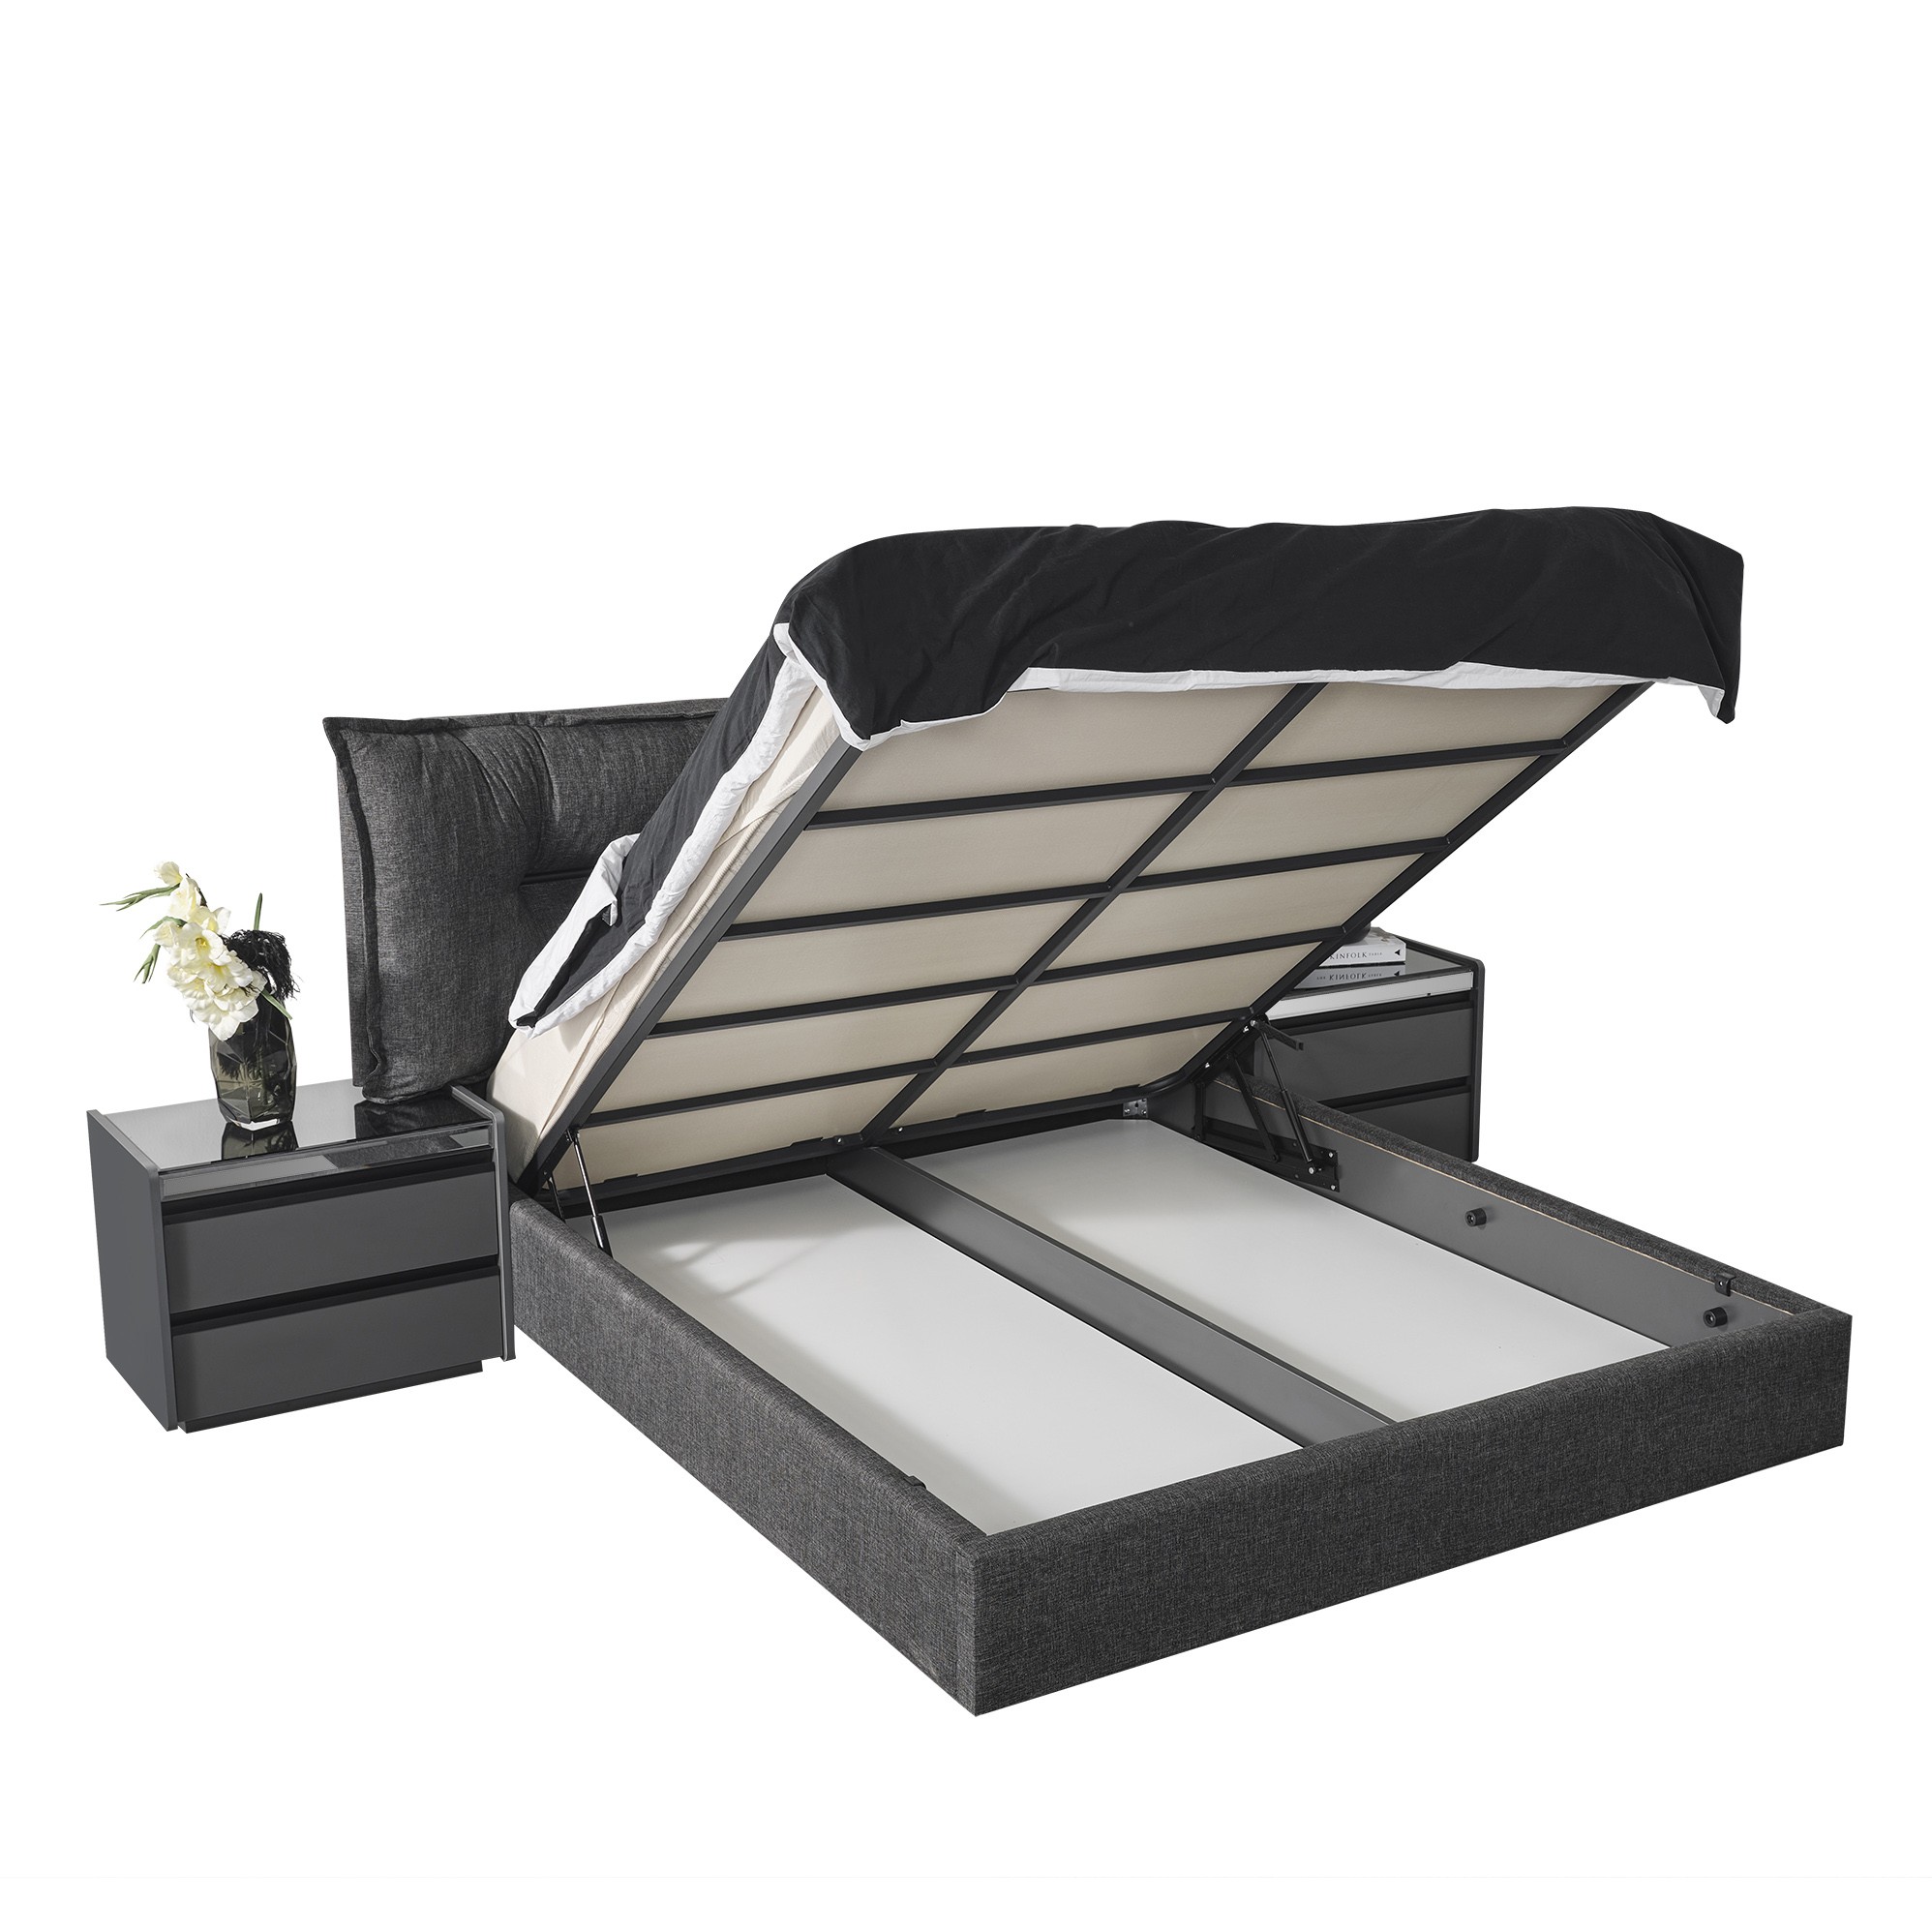 Line Bed With Storage 160x200 cm